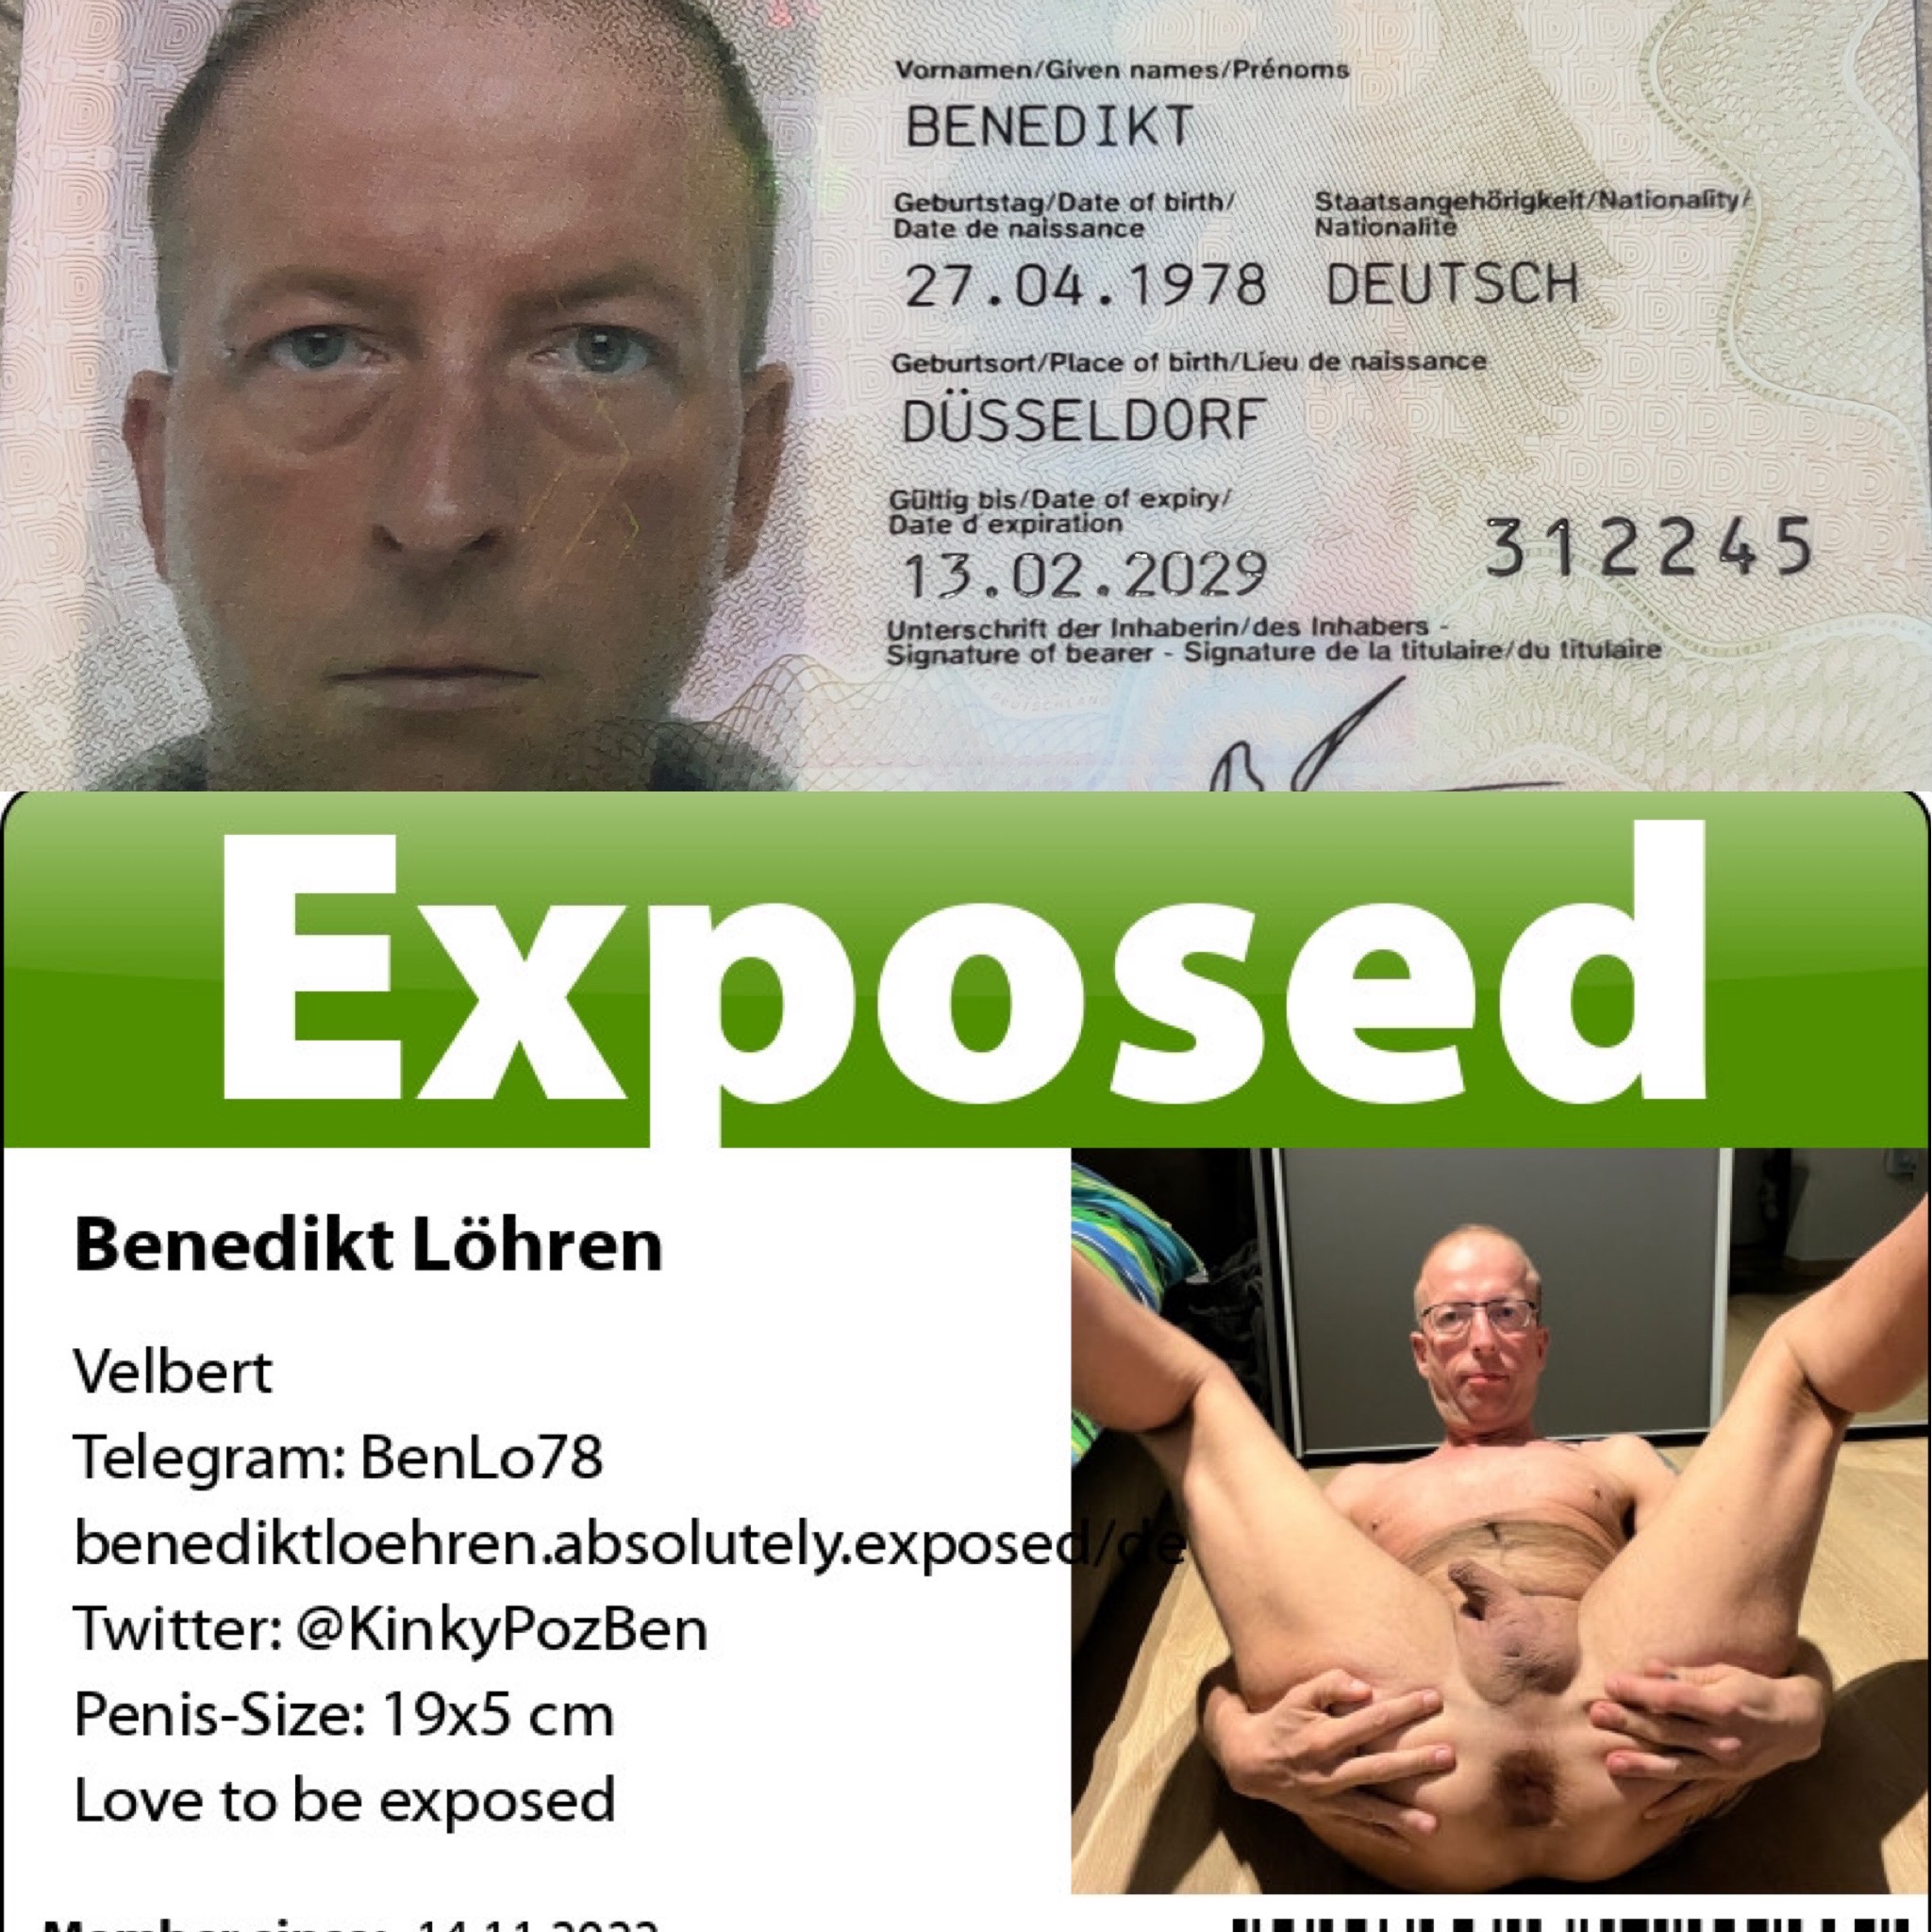 German CumSlut Benedikt Löhren full exposure for sharing
Expose these f*g forever!!!